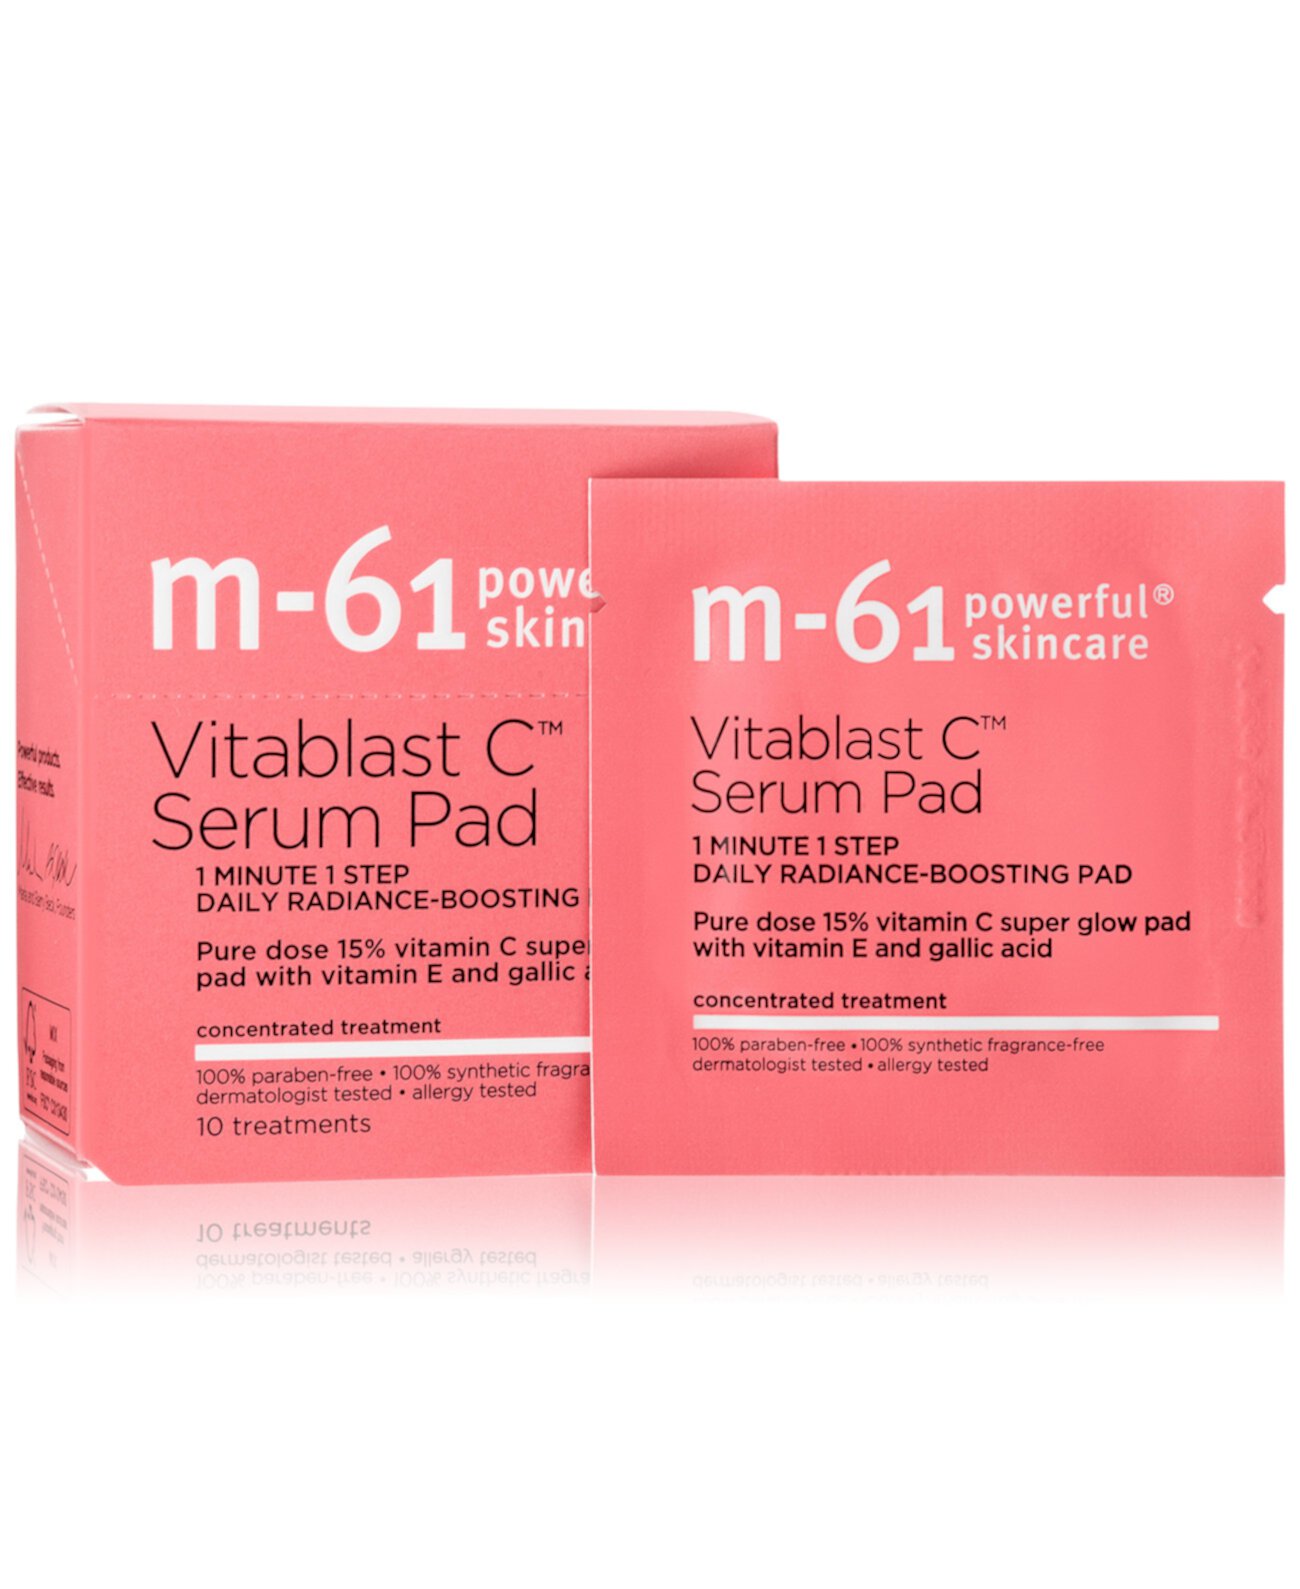 Vitablast C Сыворотка Pad, 10 шт. M-61 by Bluemercury